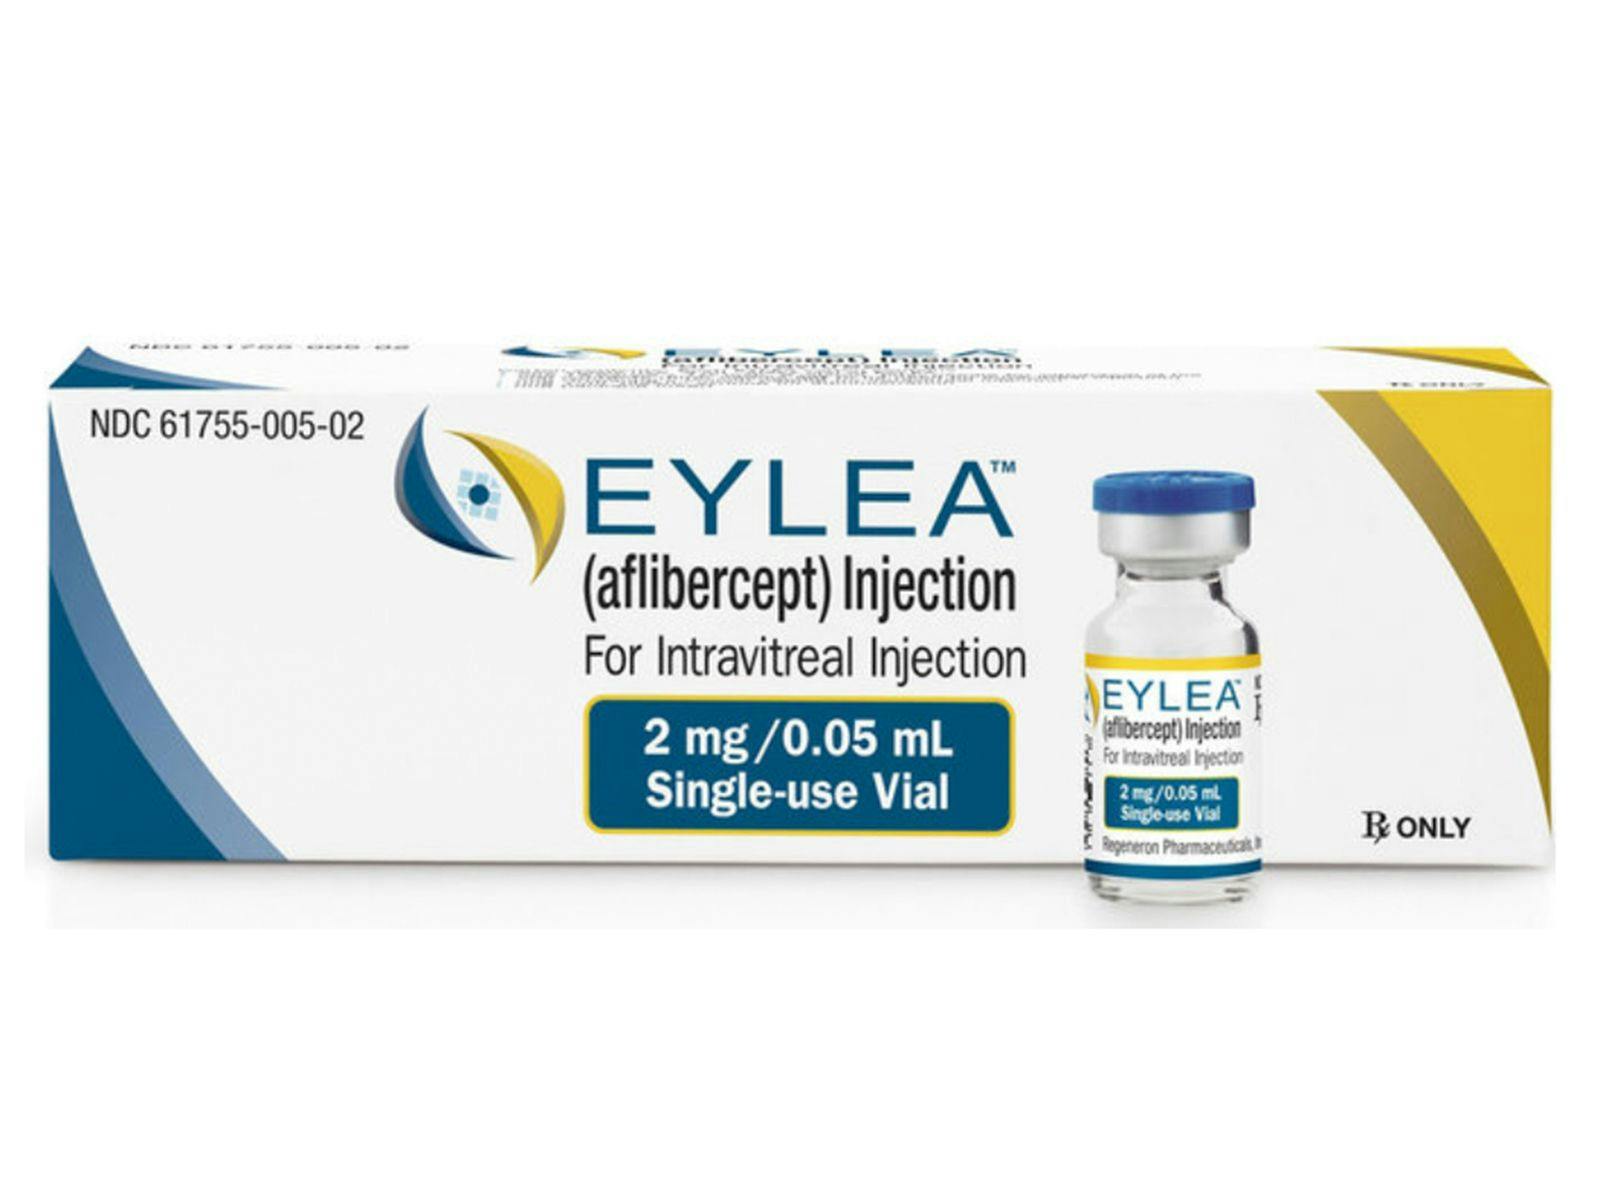 FDA Accepts sBLA for Eylea for Retinopathy in Premature Infants